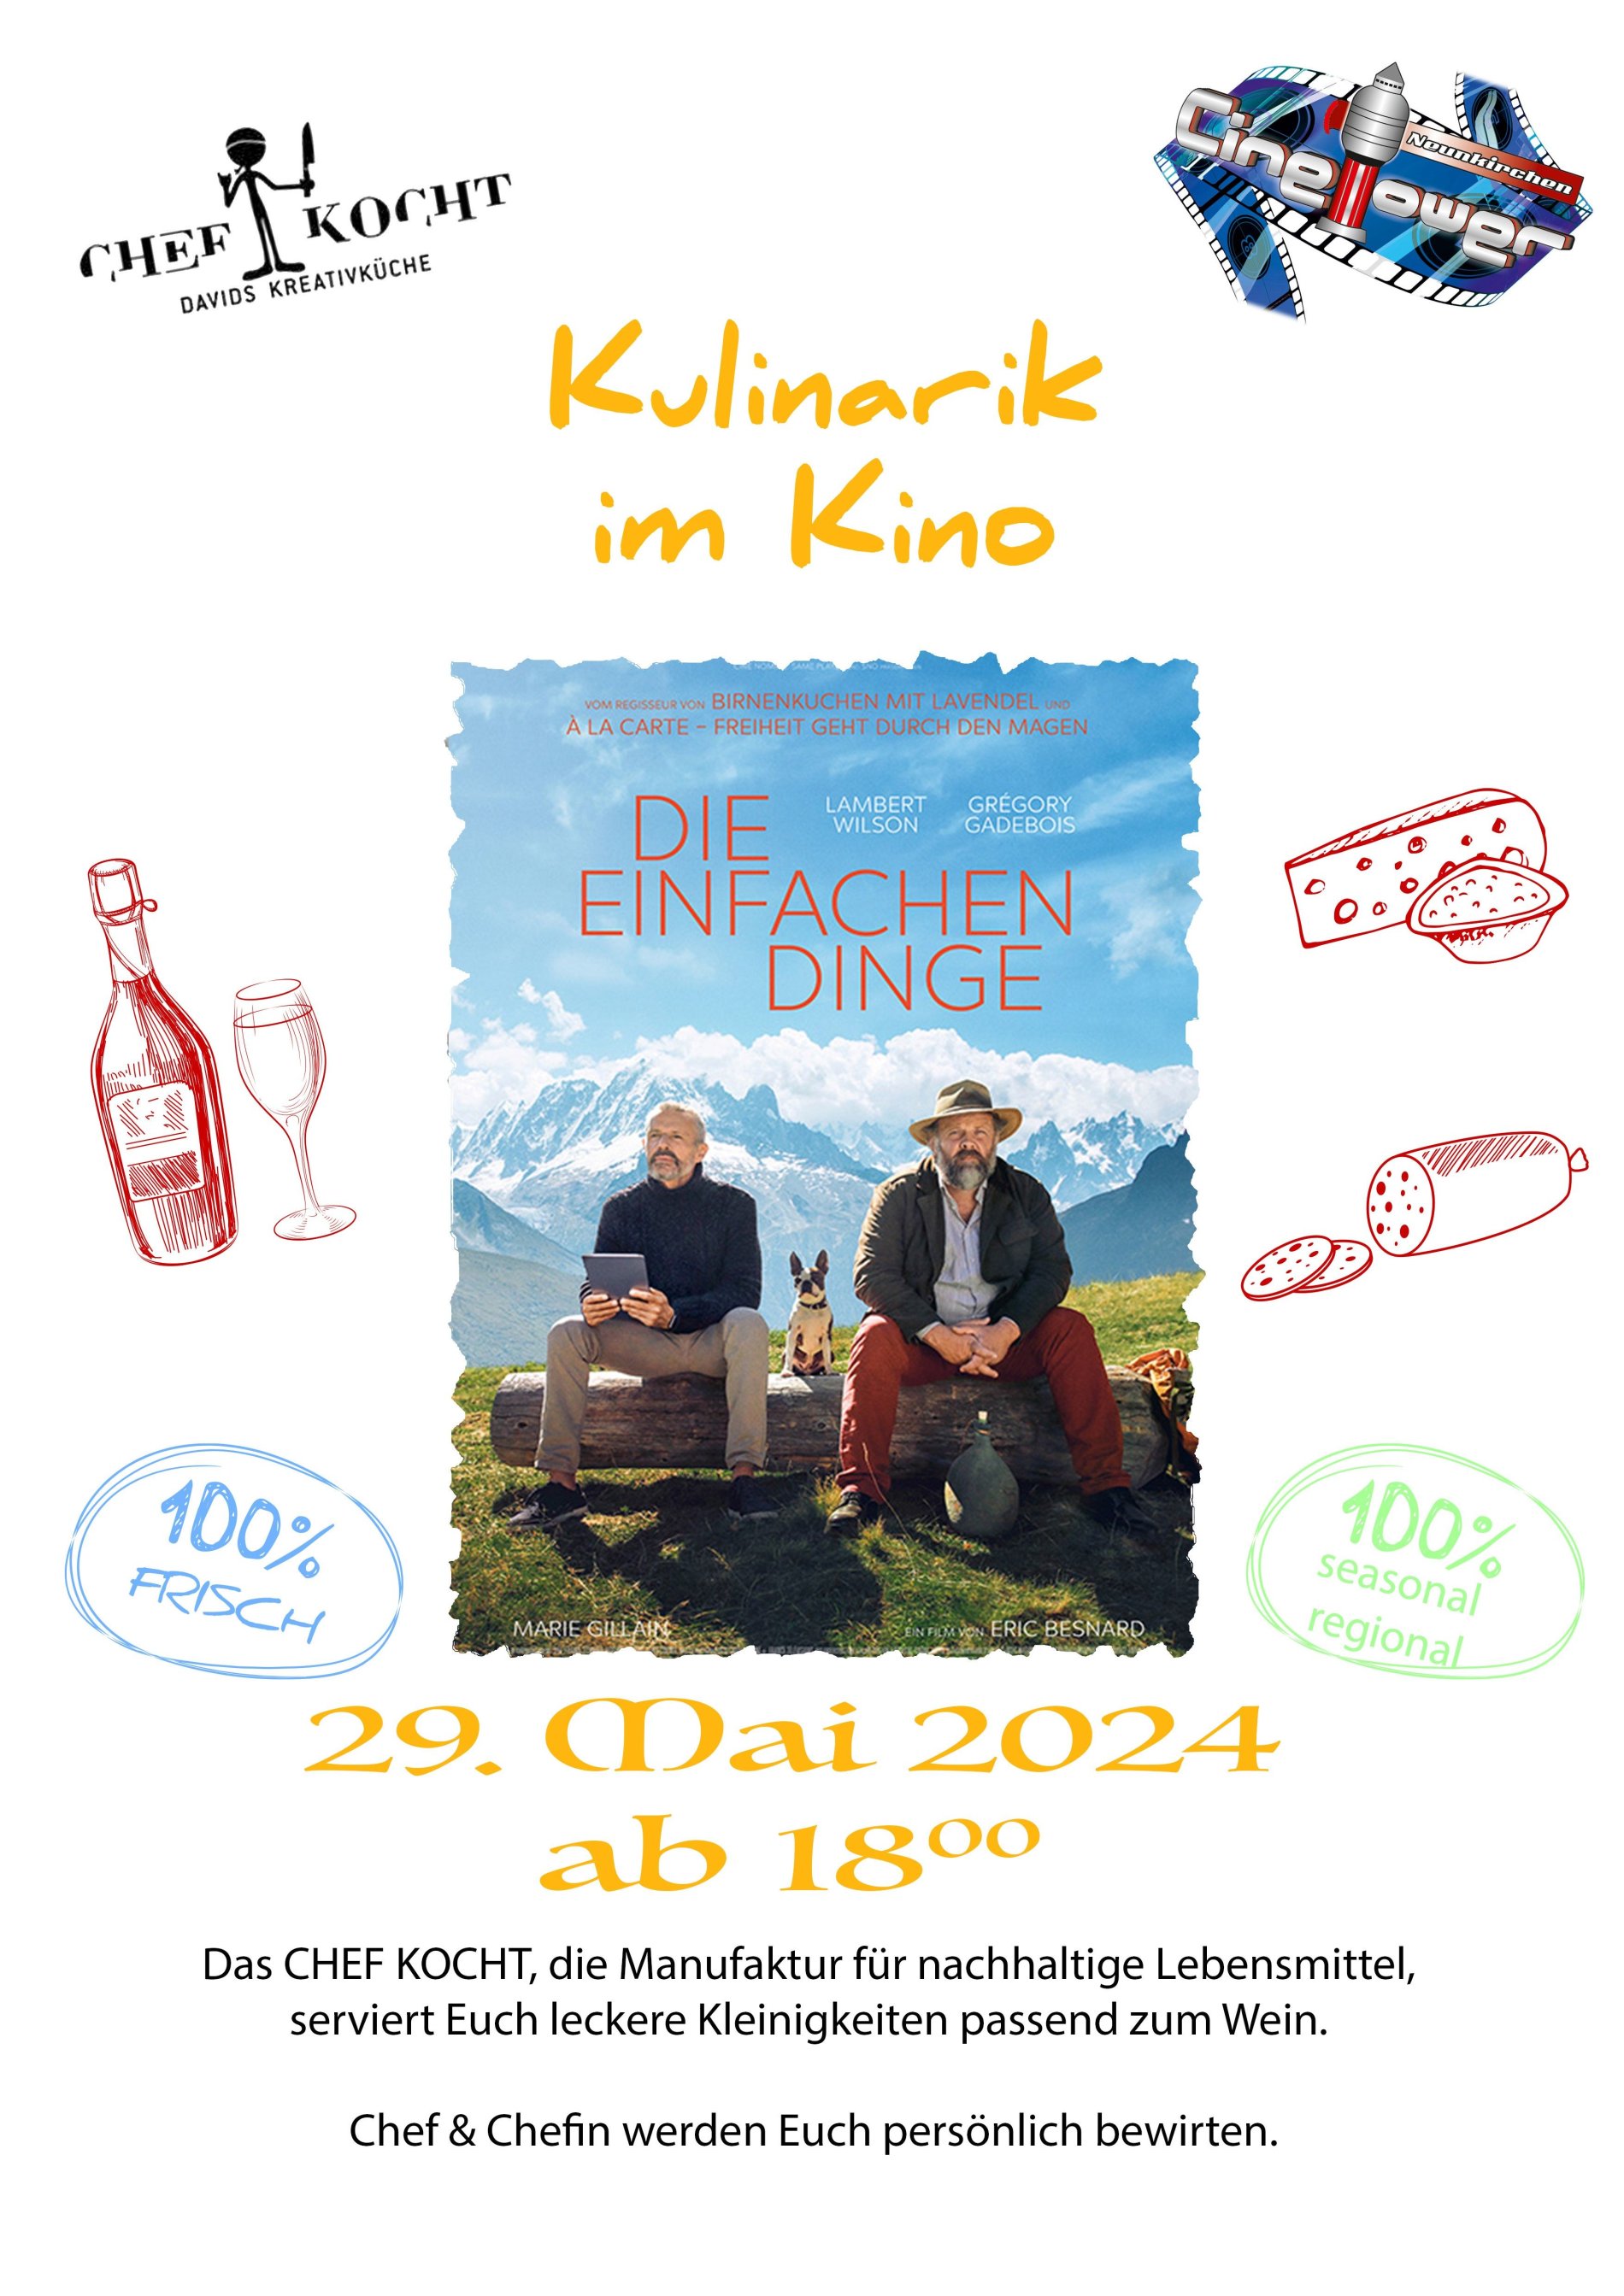 Plakat zur Veranstaltung "Kulinarik im Kino"